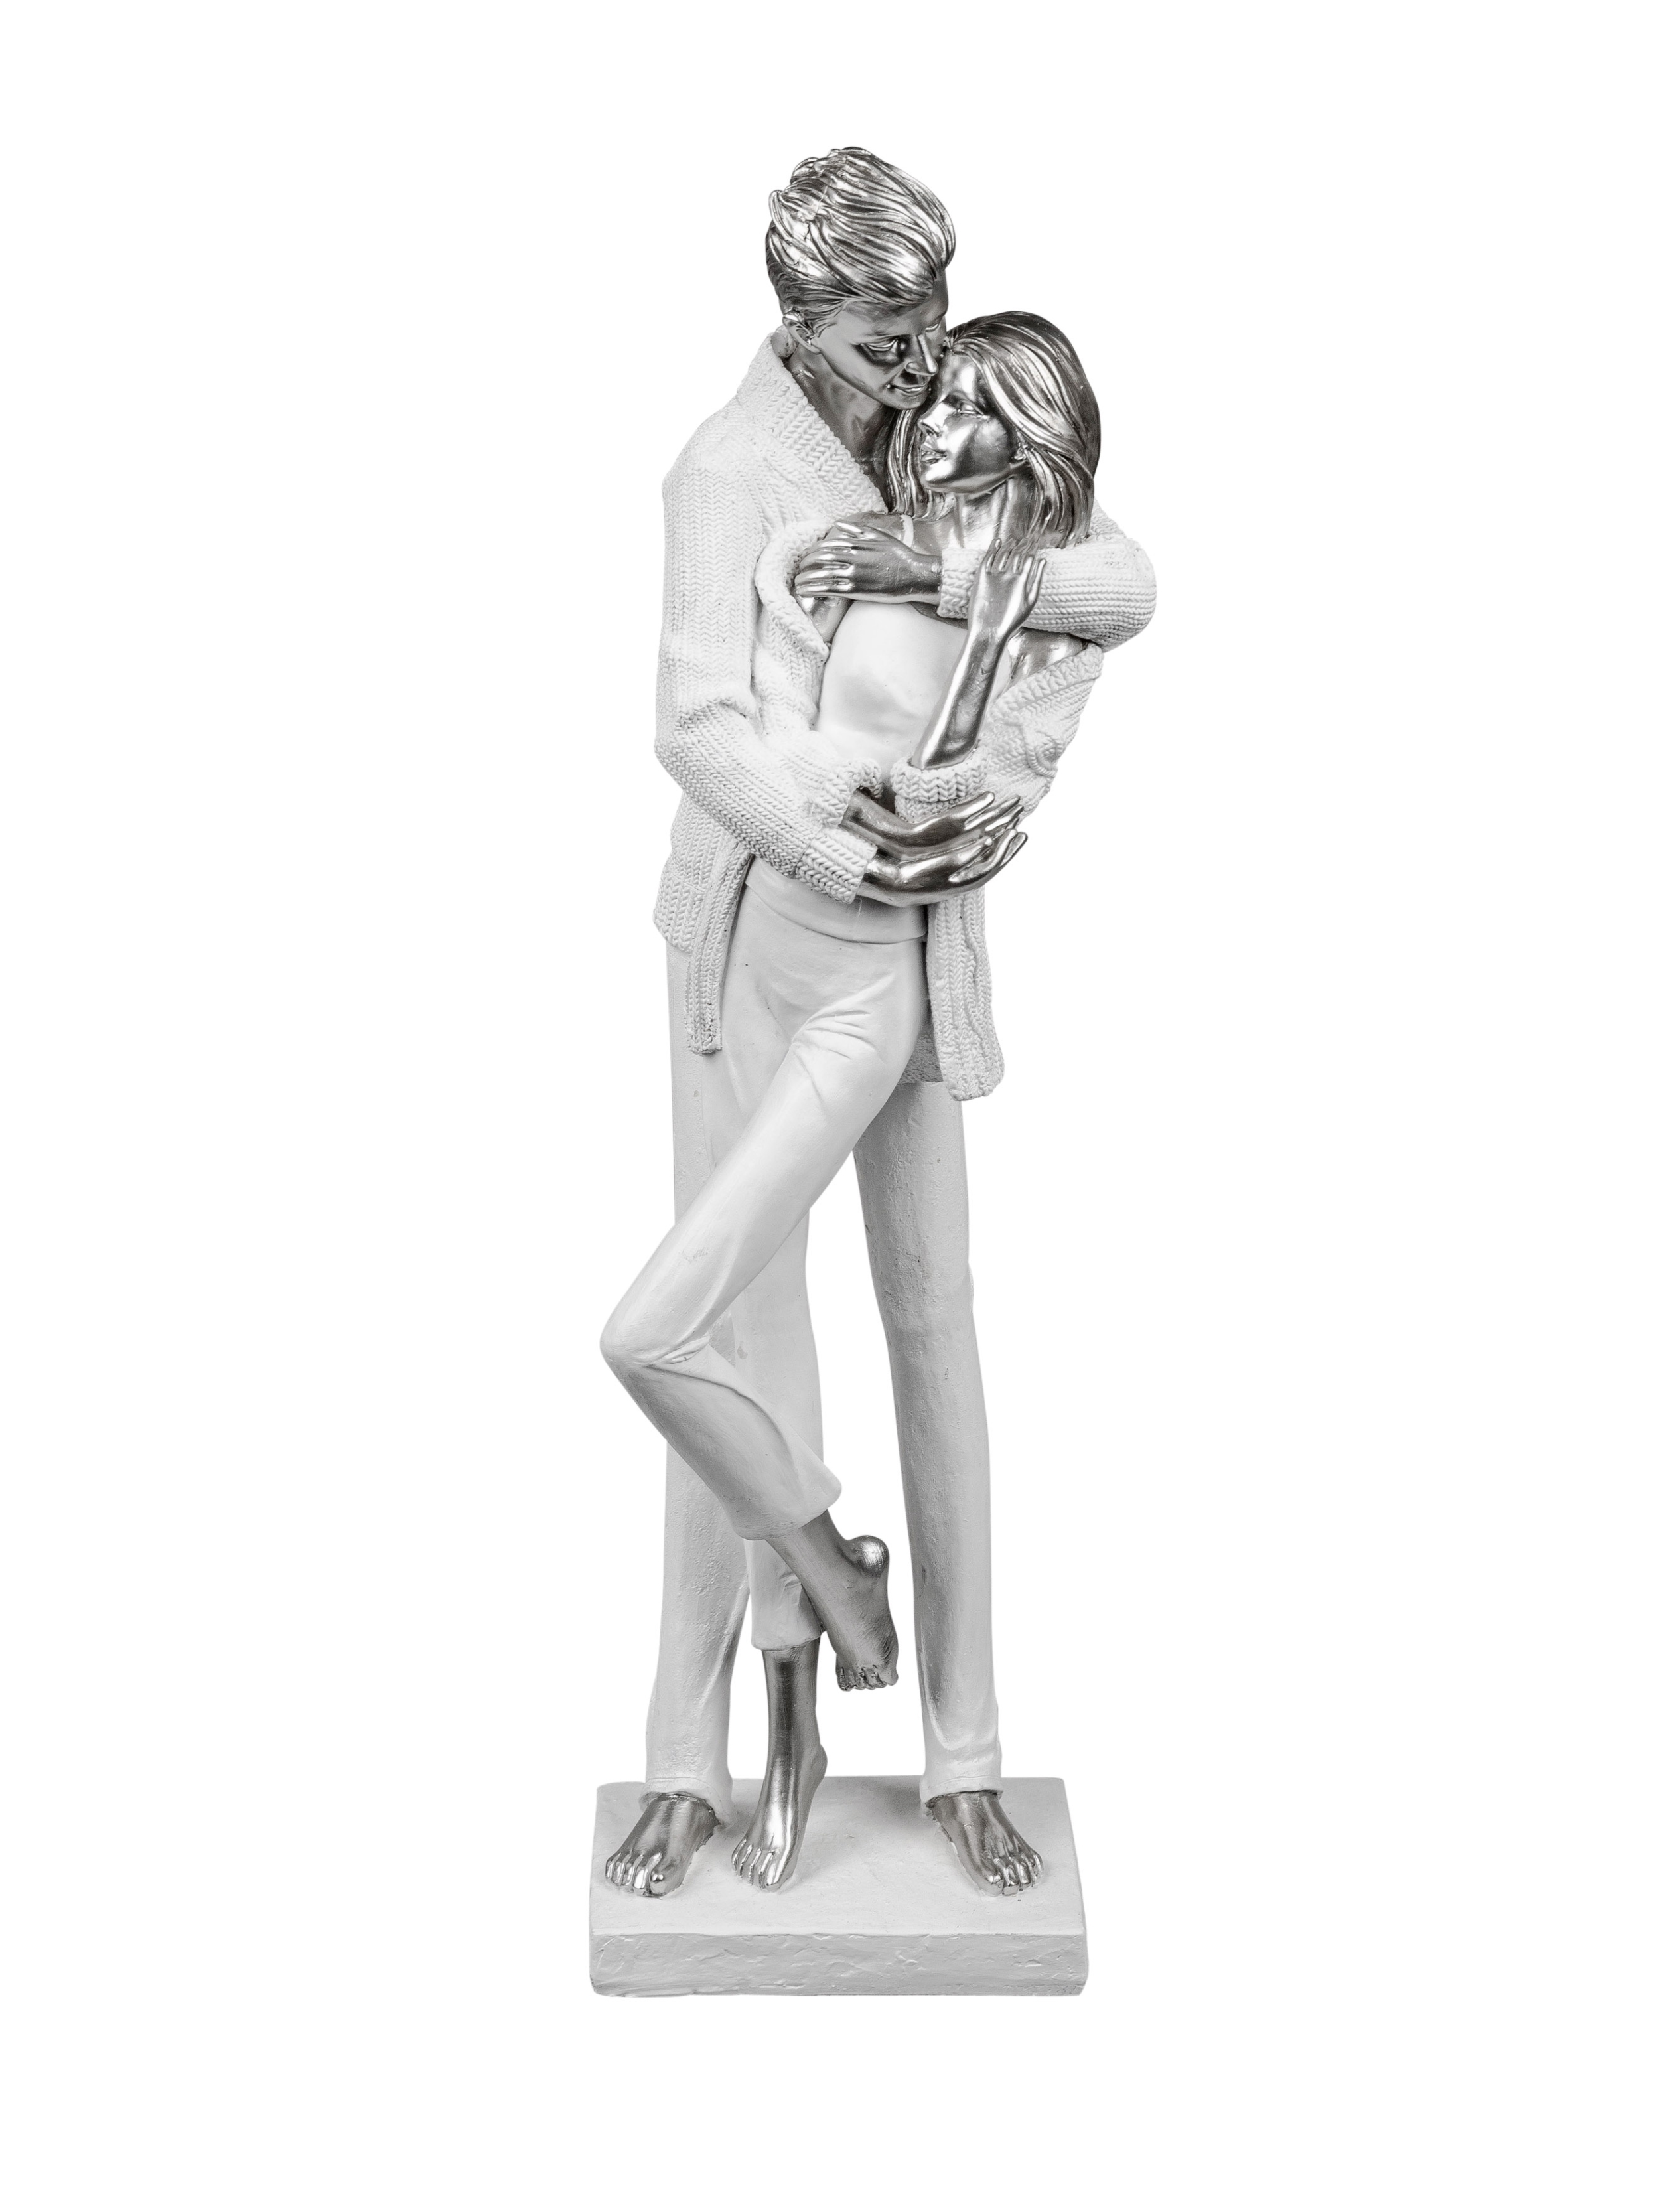 96329 Skulptur Figur Objekt Deko Balance Heart aus Keramik weiß silber Höhe 31cm 